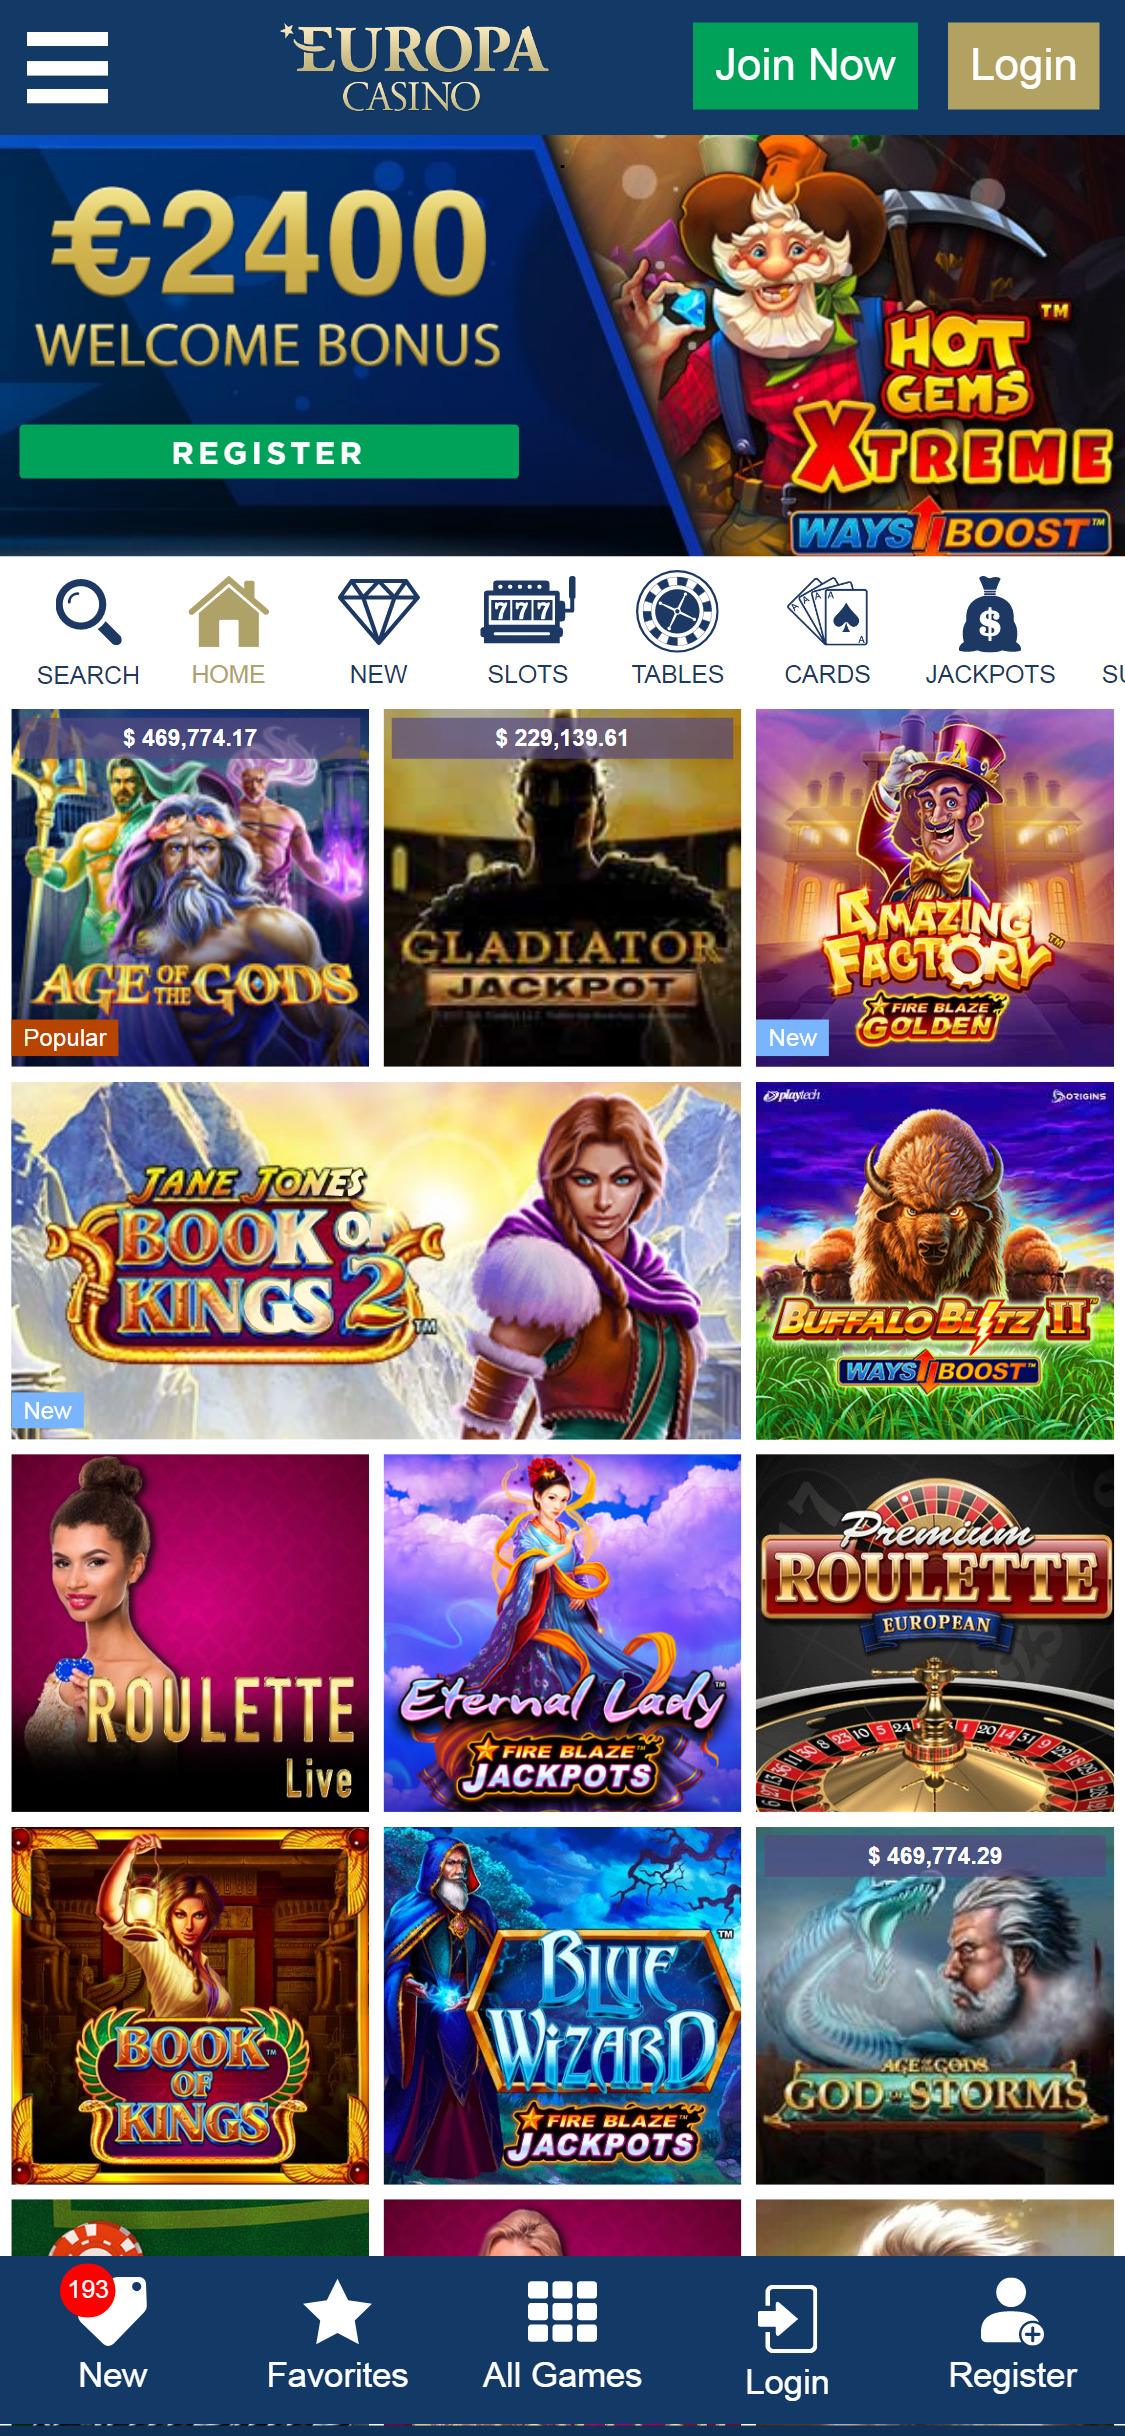 Europa Casino Mobile Games Review